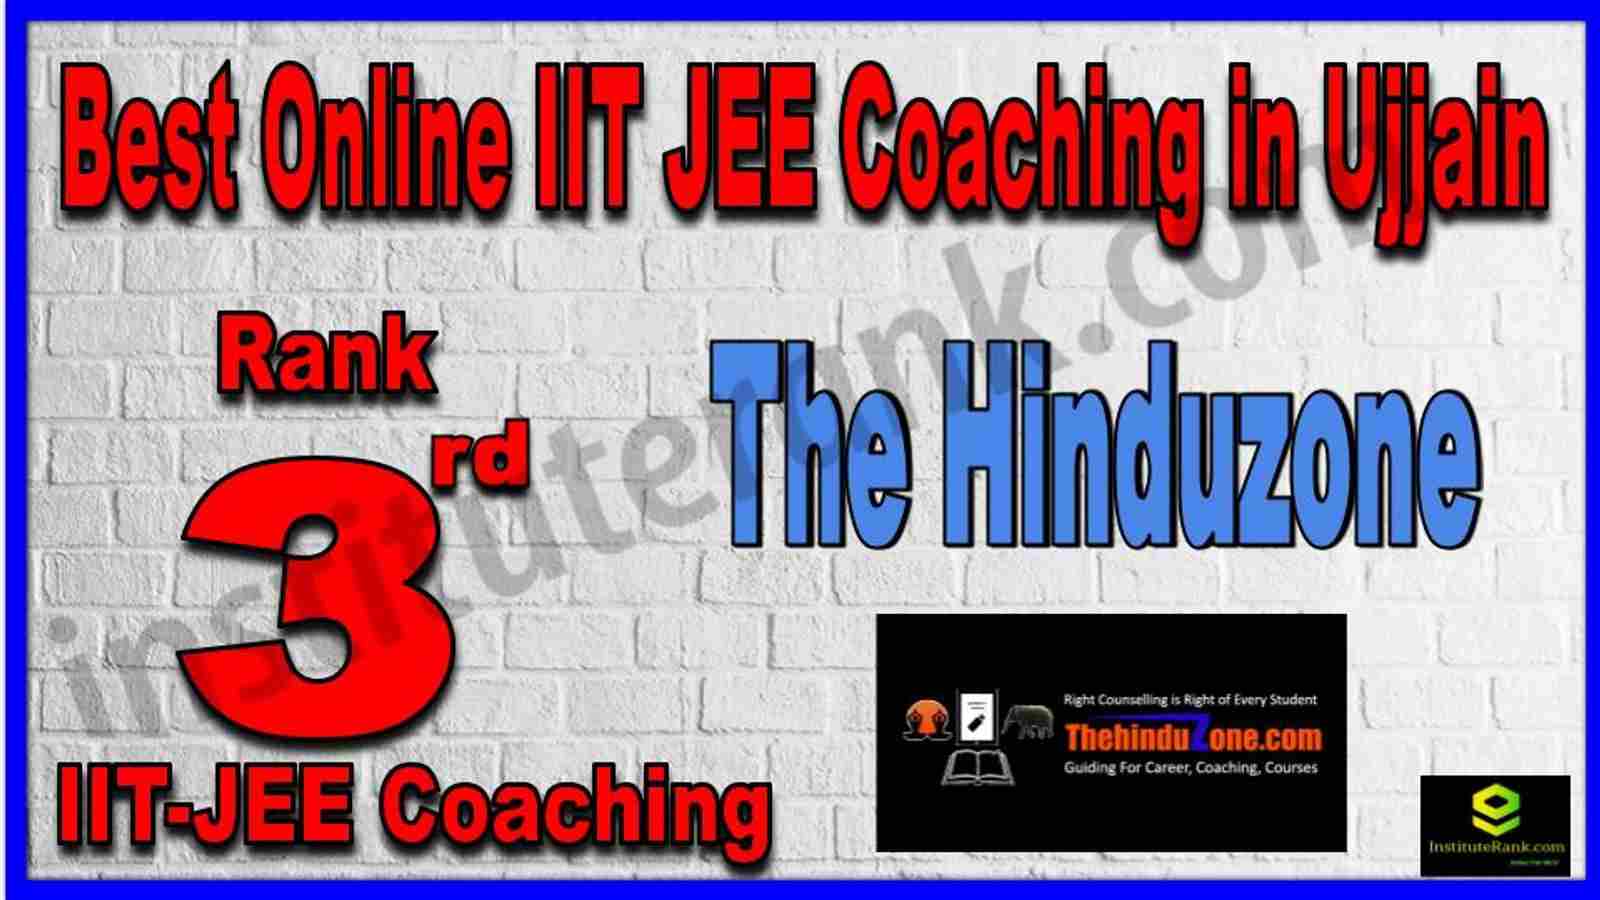 Rank 3rd Best Online IIT-JEE Coaching in Ujjain